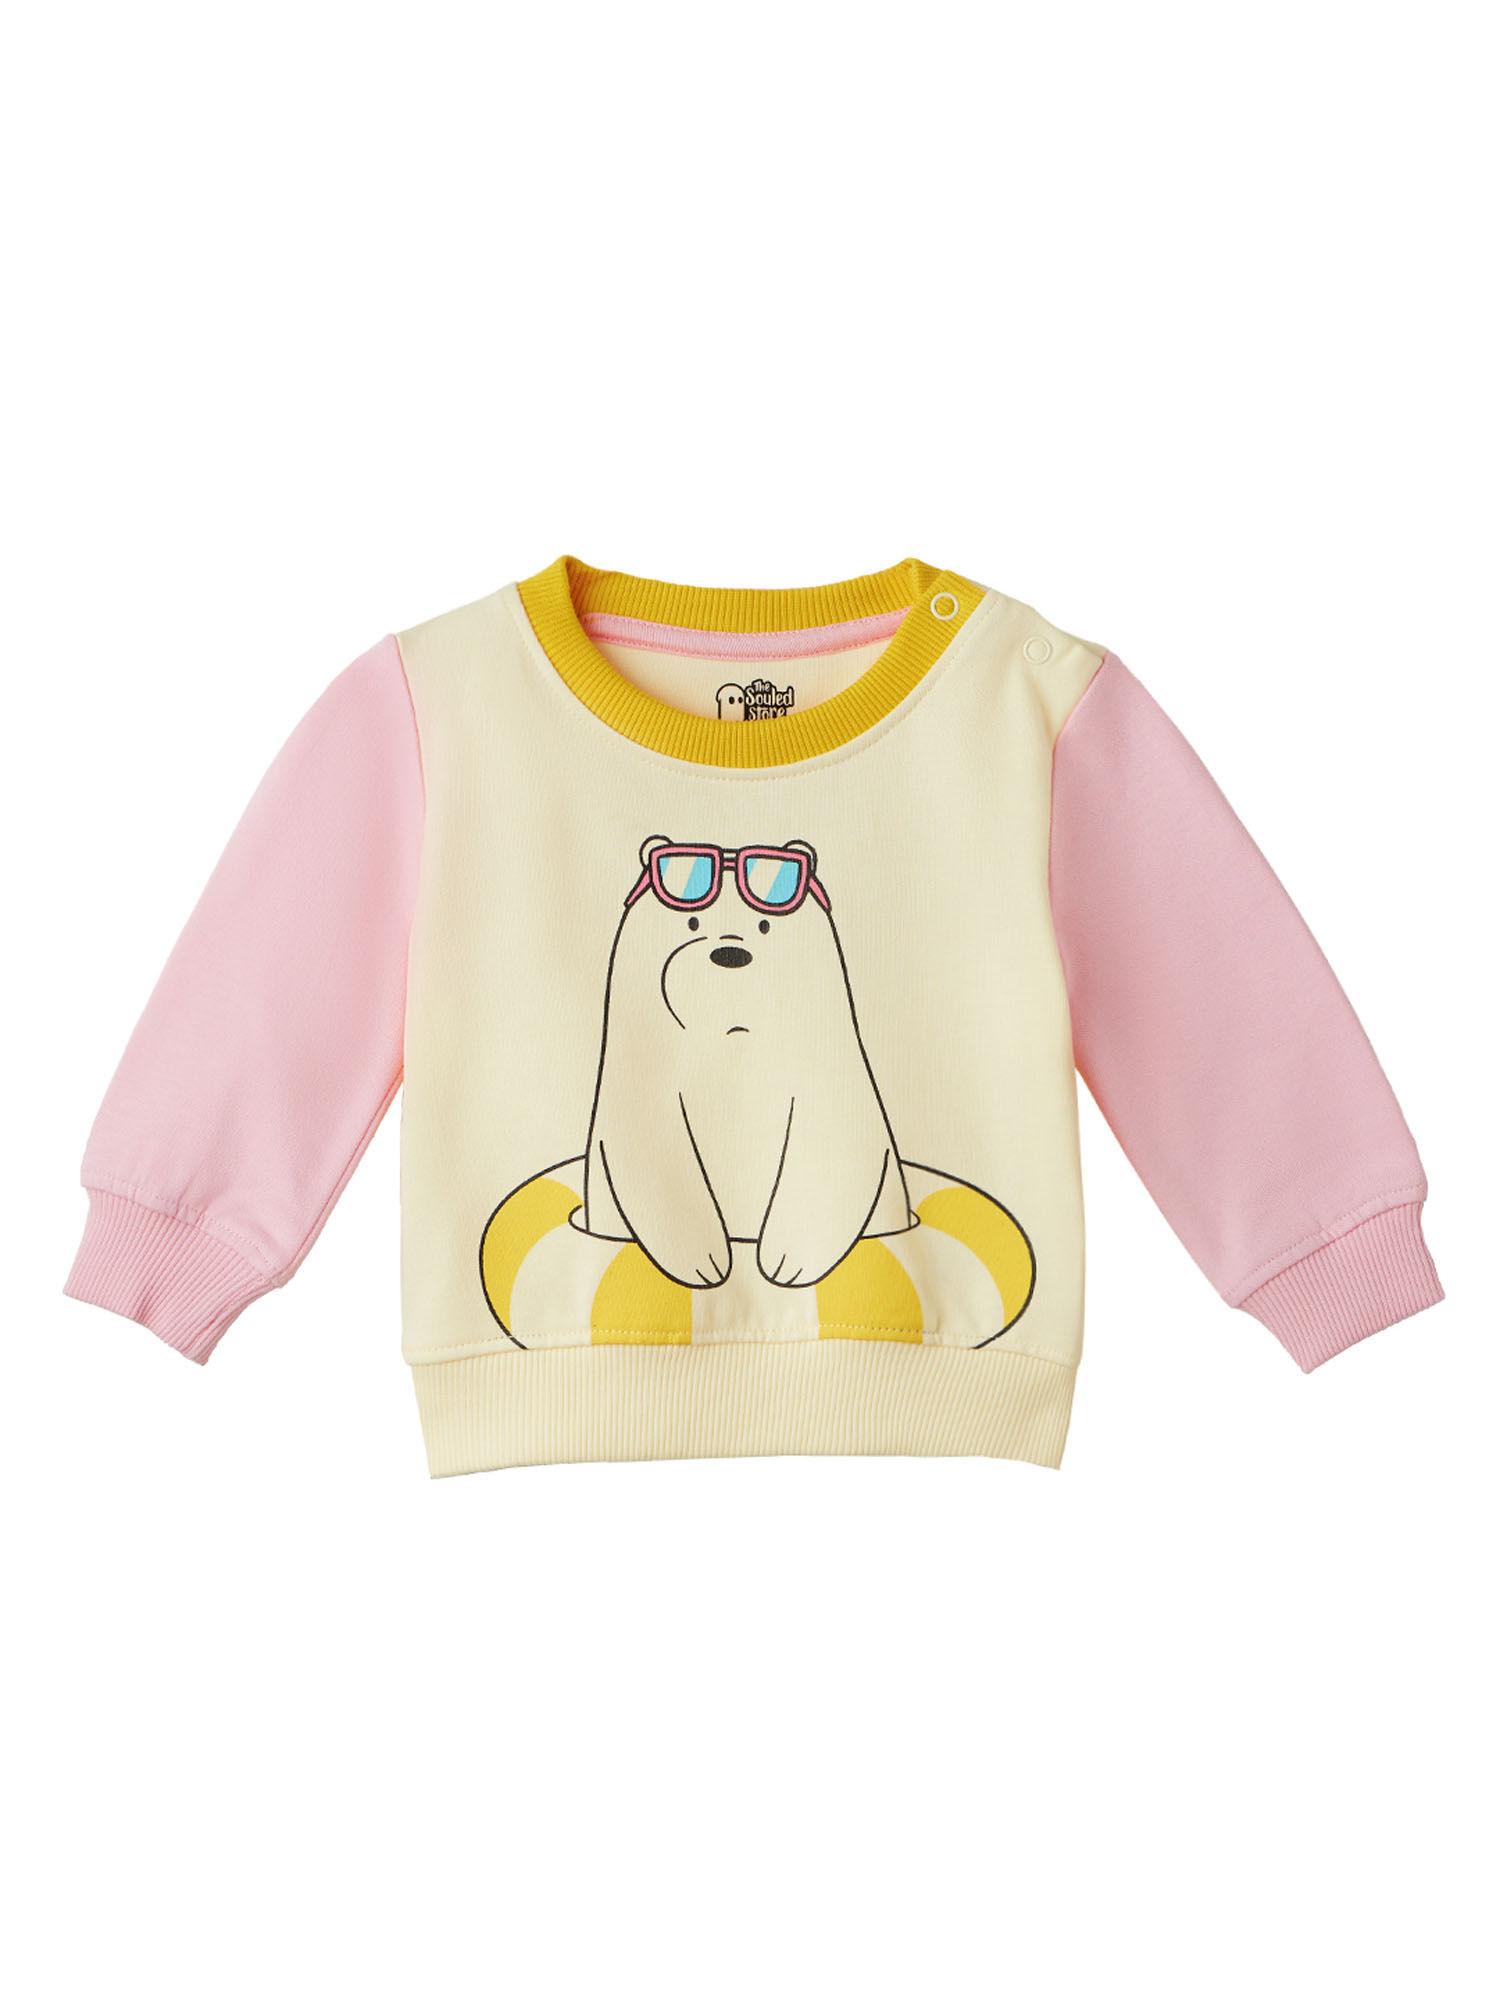 Official We Bare Bears Ice Bear Girls Cotton Sweatshirt-Multi-Color